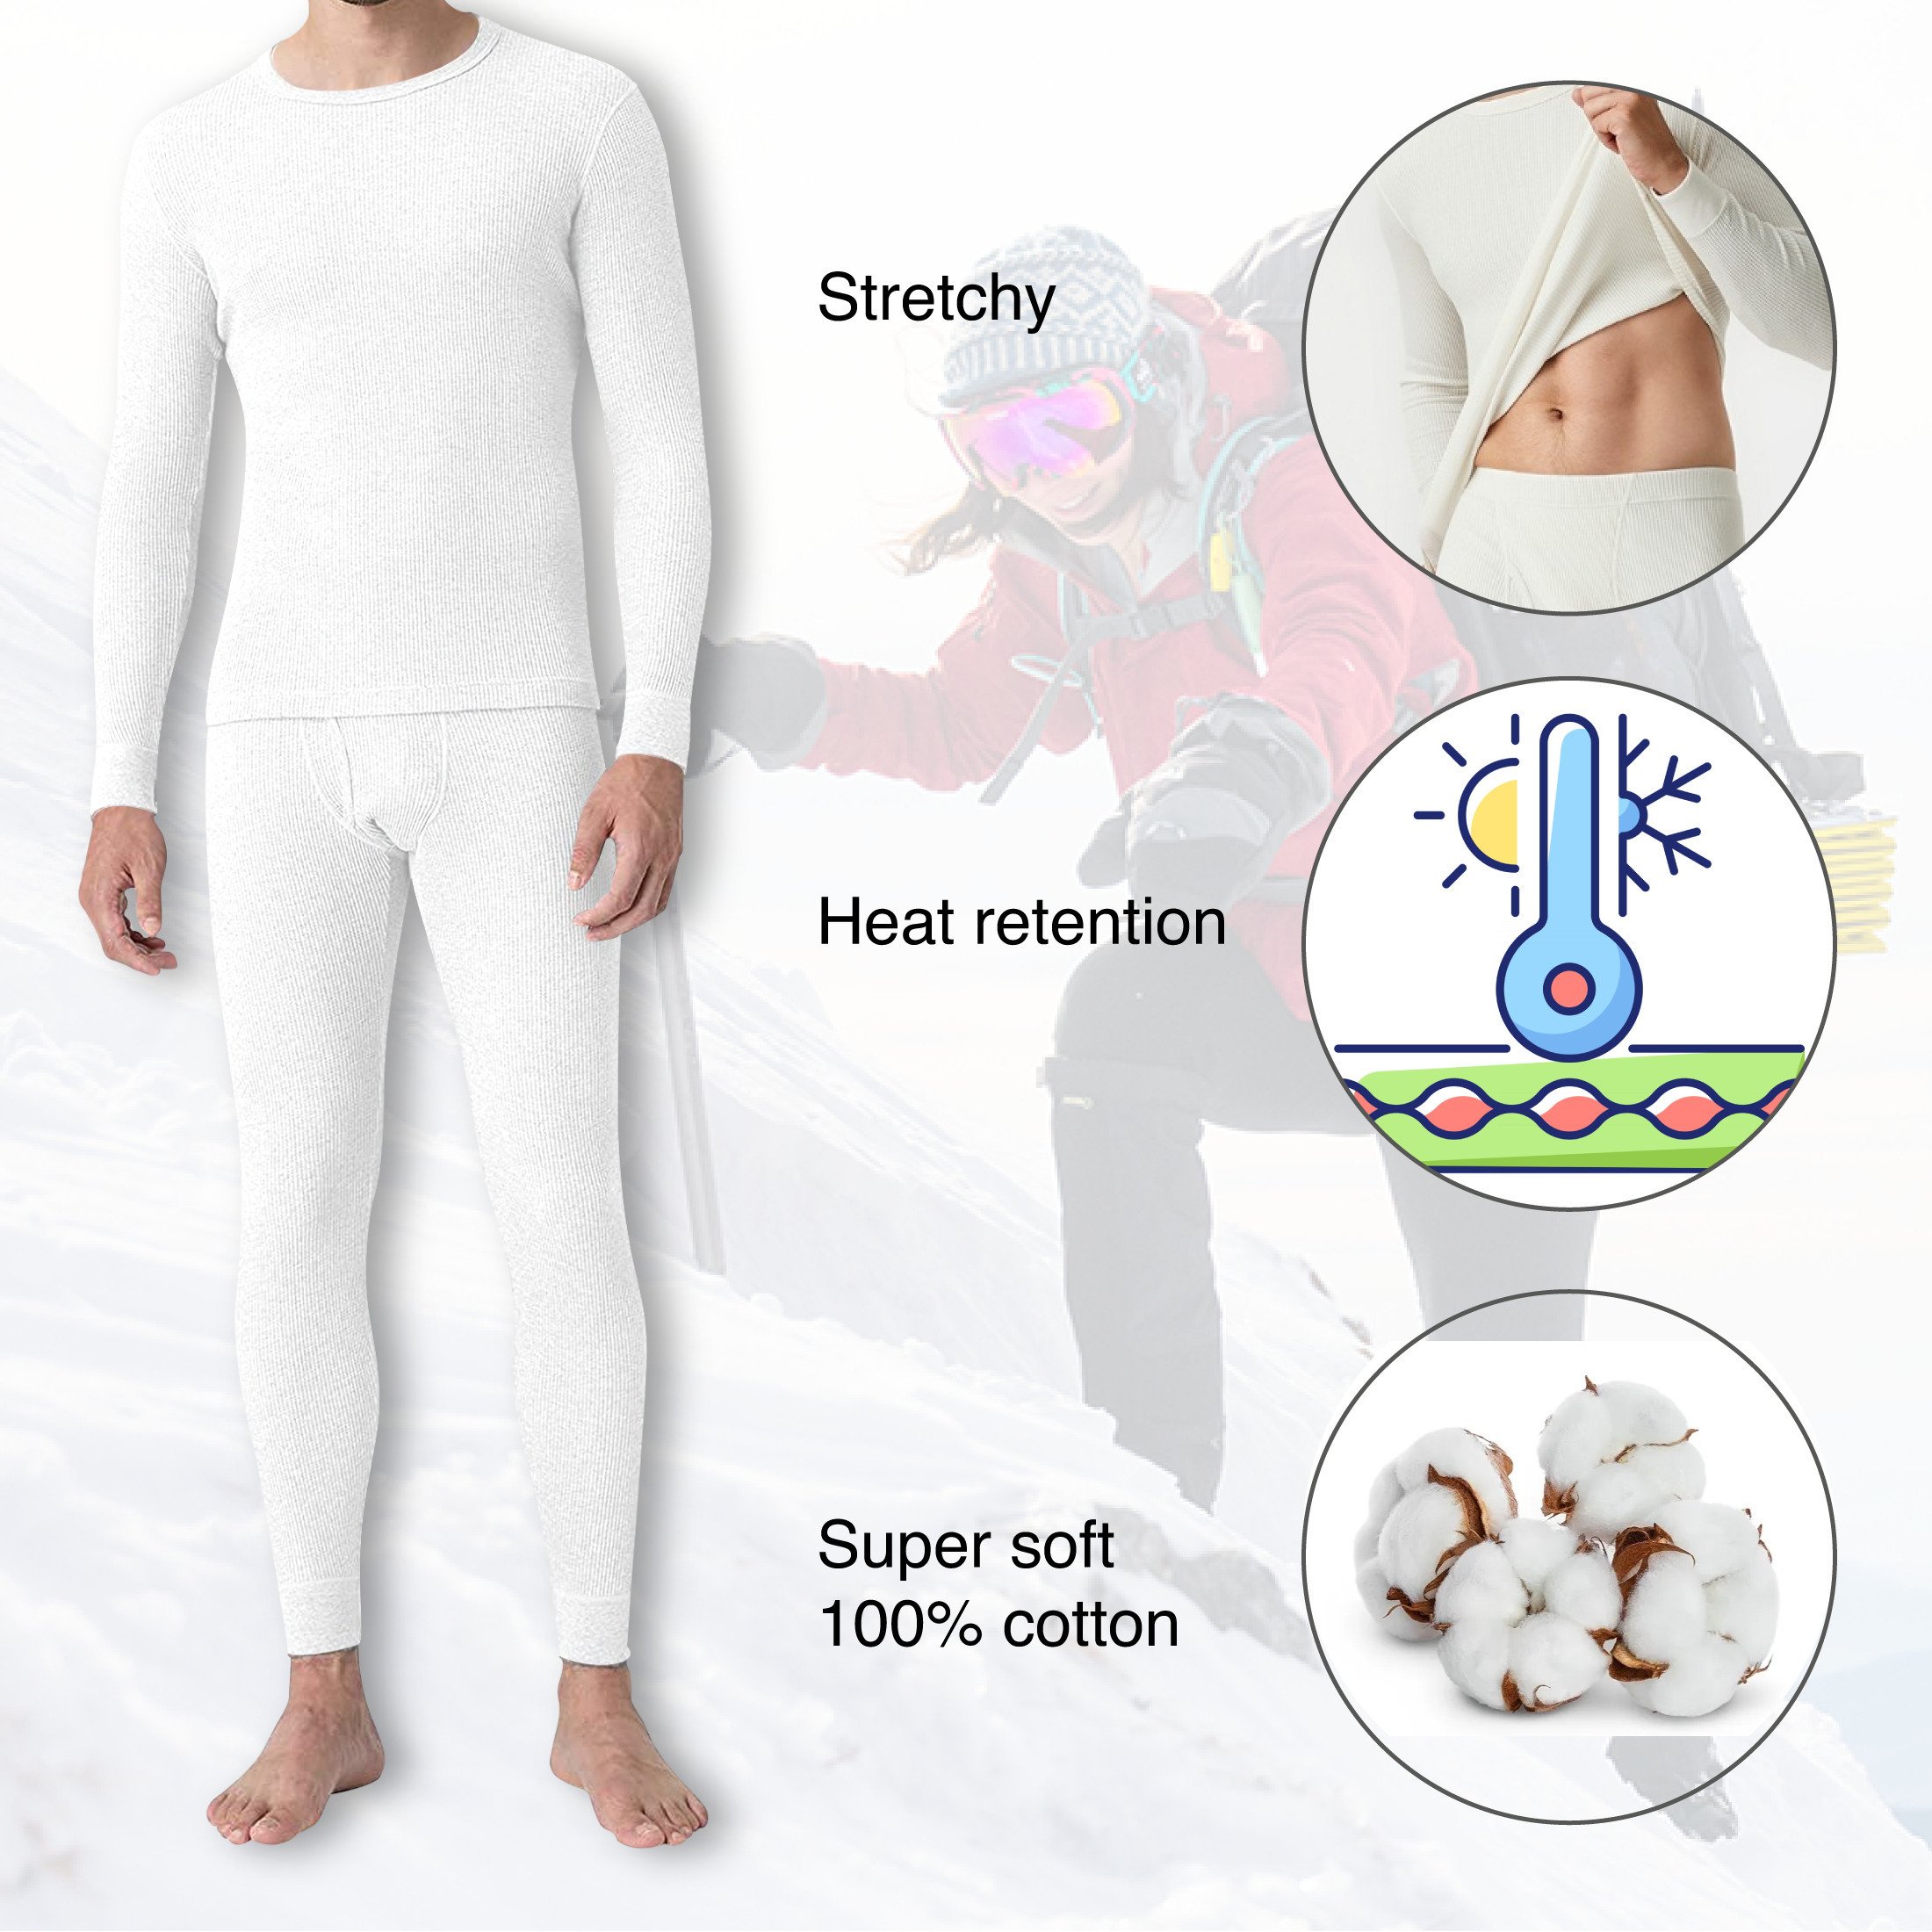 2-Sets: Men's Super Soft Cotton Waffle Knit Winter Thermal Underwear Set - White & White, Large